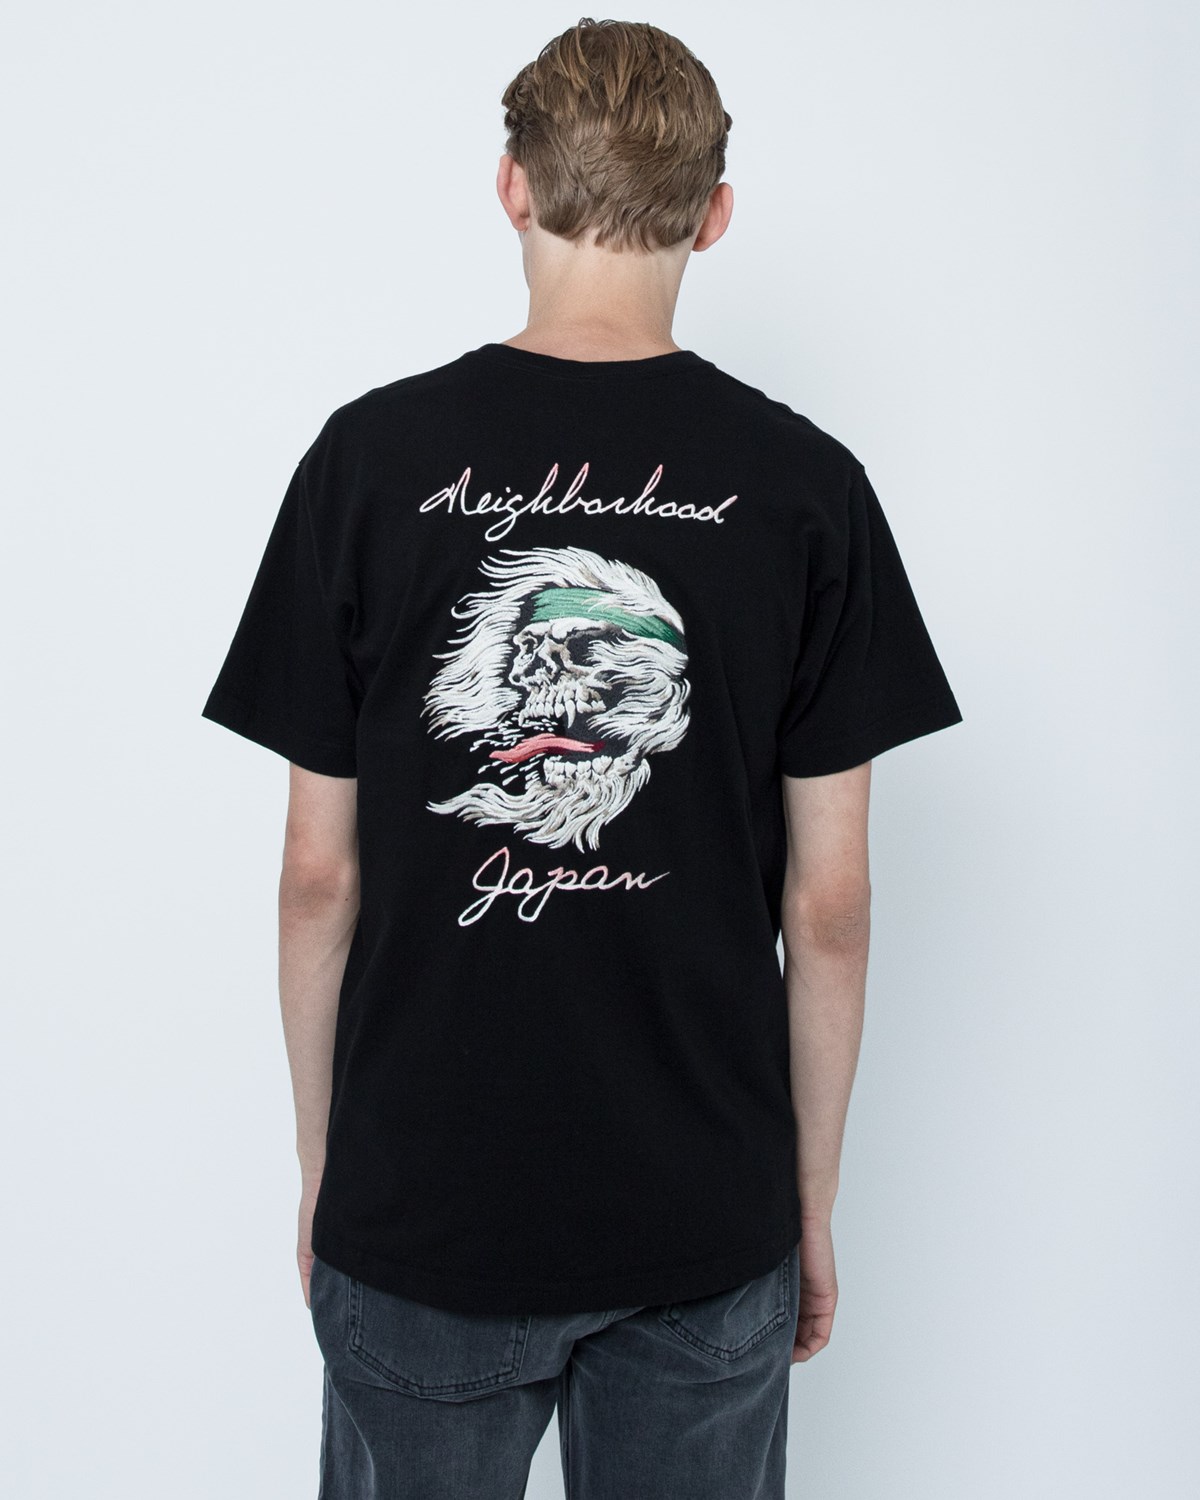 Embroidered Tee Neighborhood Tops T-Shirts Black